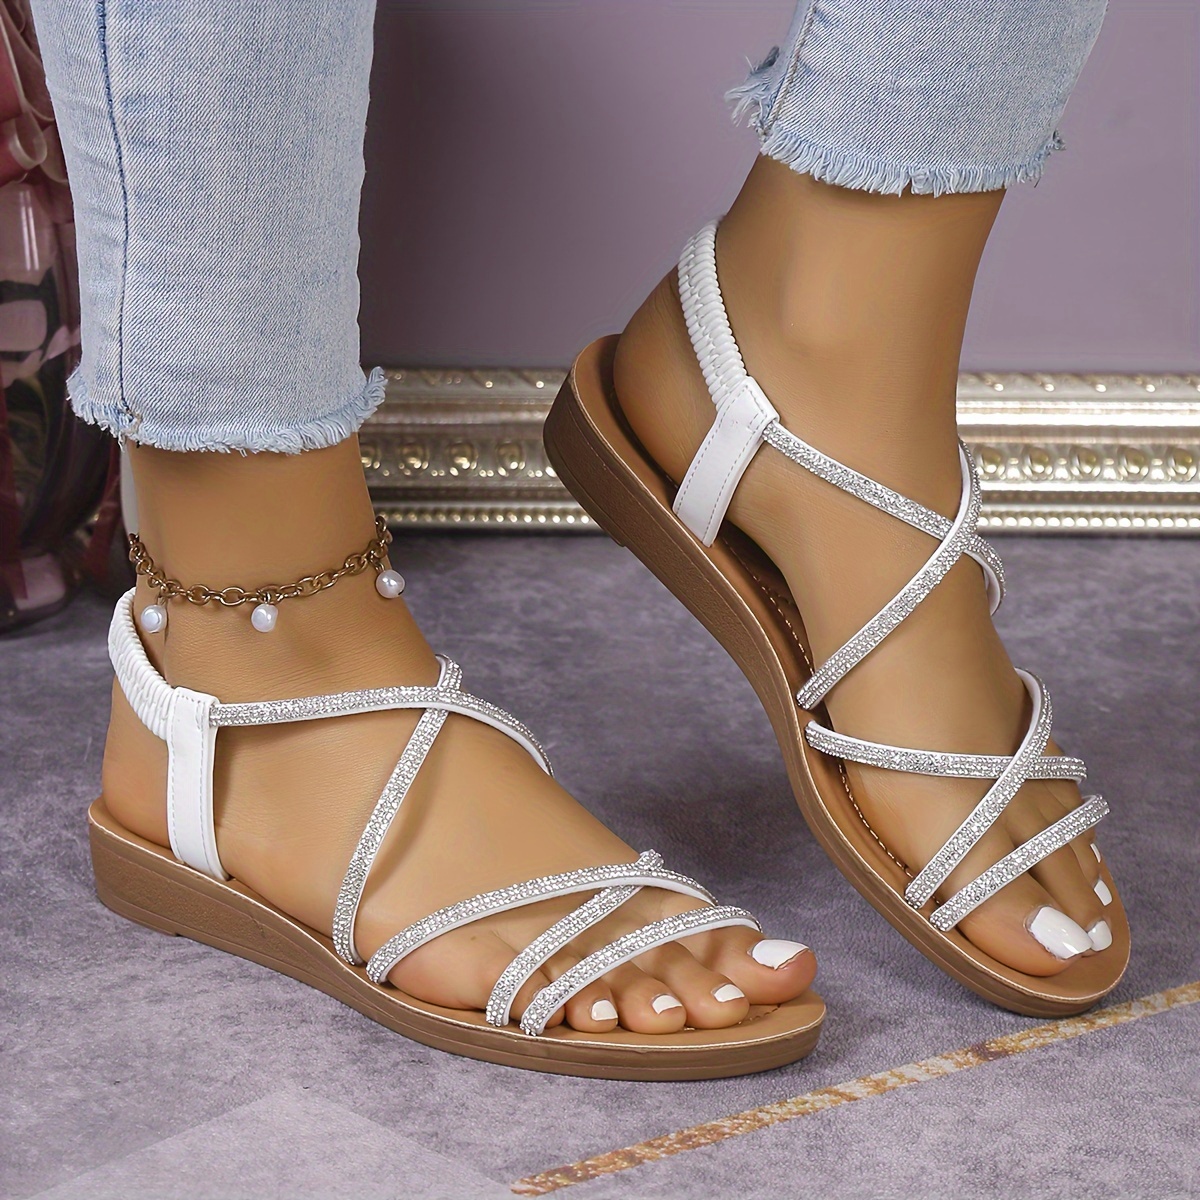 

Women's Summer Fashion Sandals, Cross Strap Rhinestone Embellished, Soft Sole Wedge, Faux Leather Material, Stylish Footwear